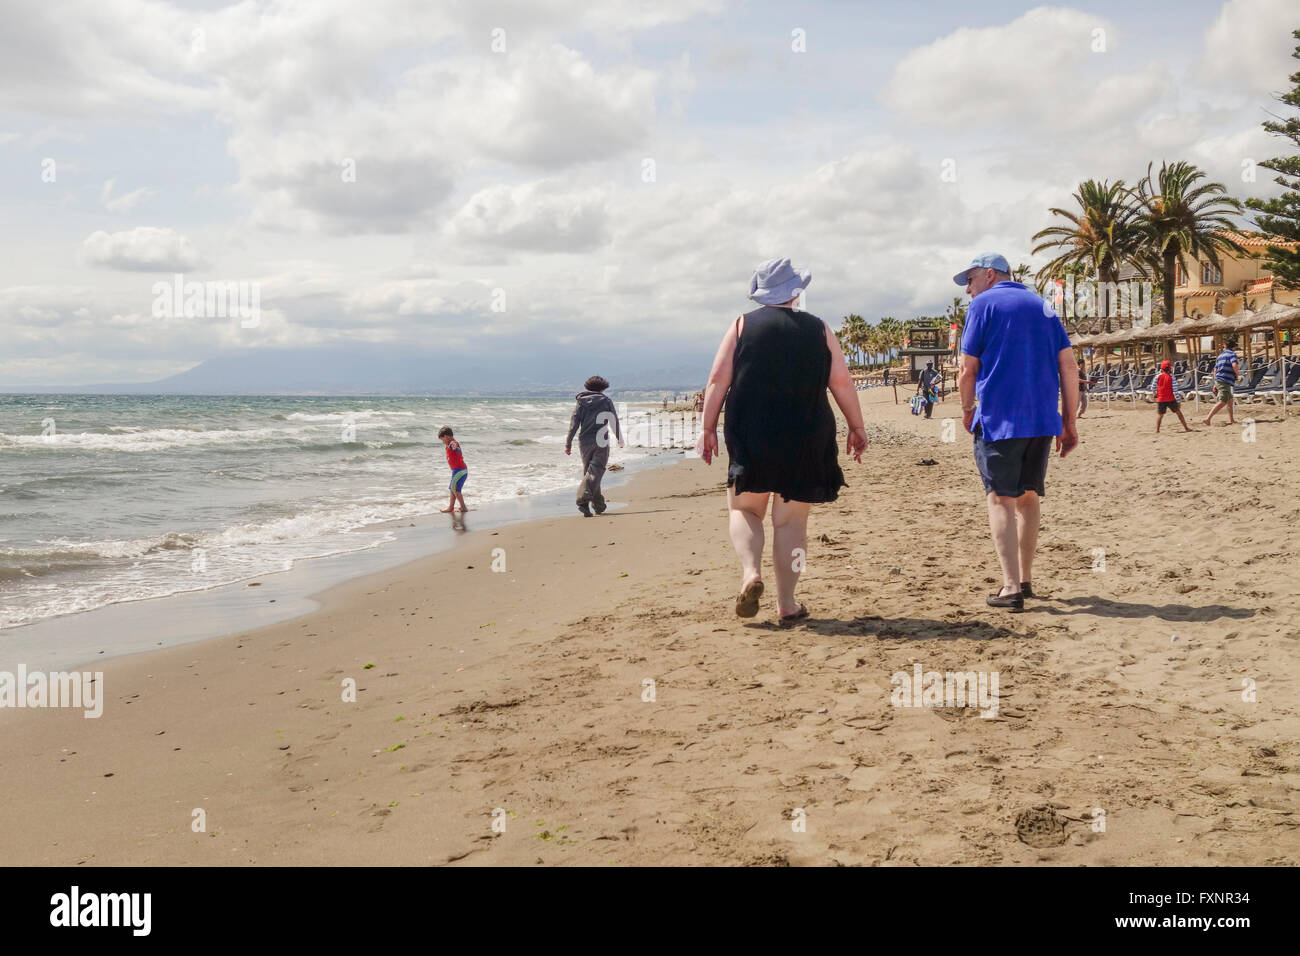 Älteres Ehepaar bei einem Spaziergang entlang des Strandes in Spanien, bei bewölktem Wetter. Andalusien, Spanien. Stockfoto